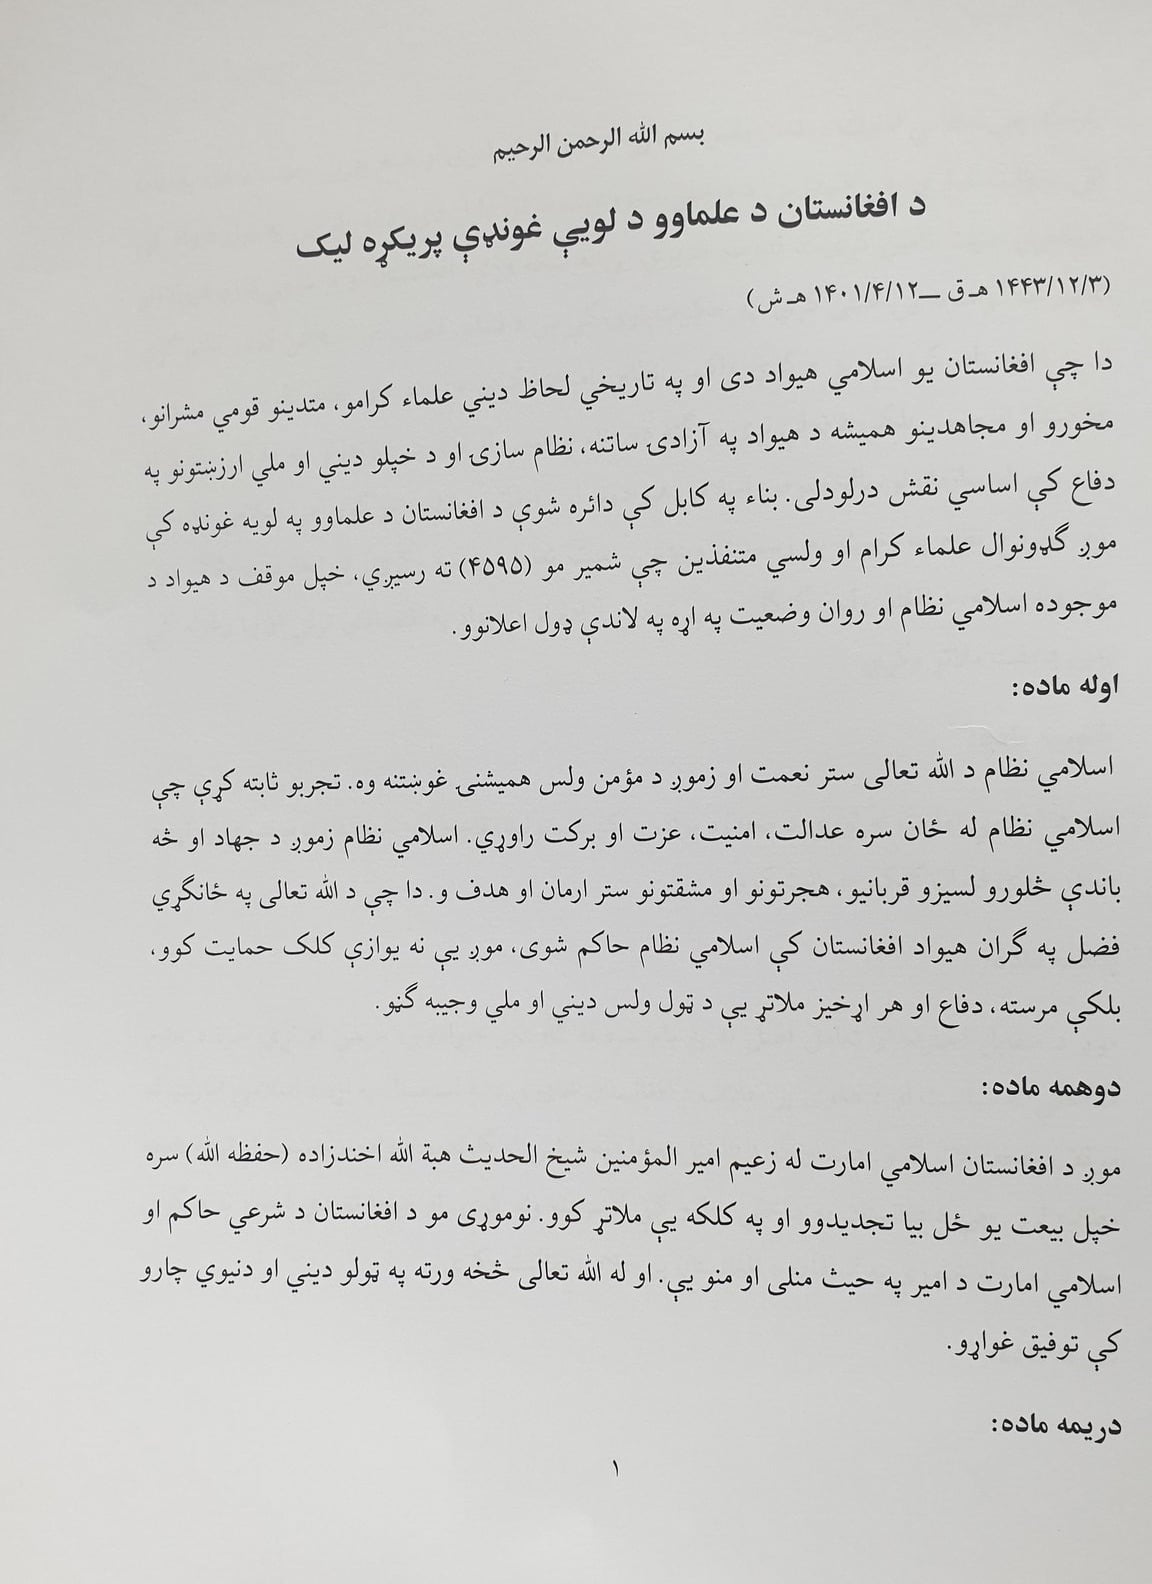 Declaration of the Ulema Council at the Loya Jirga...